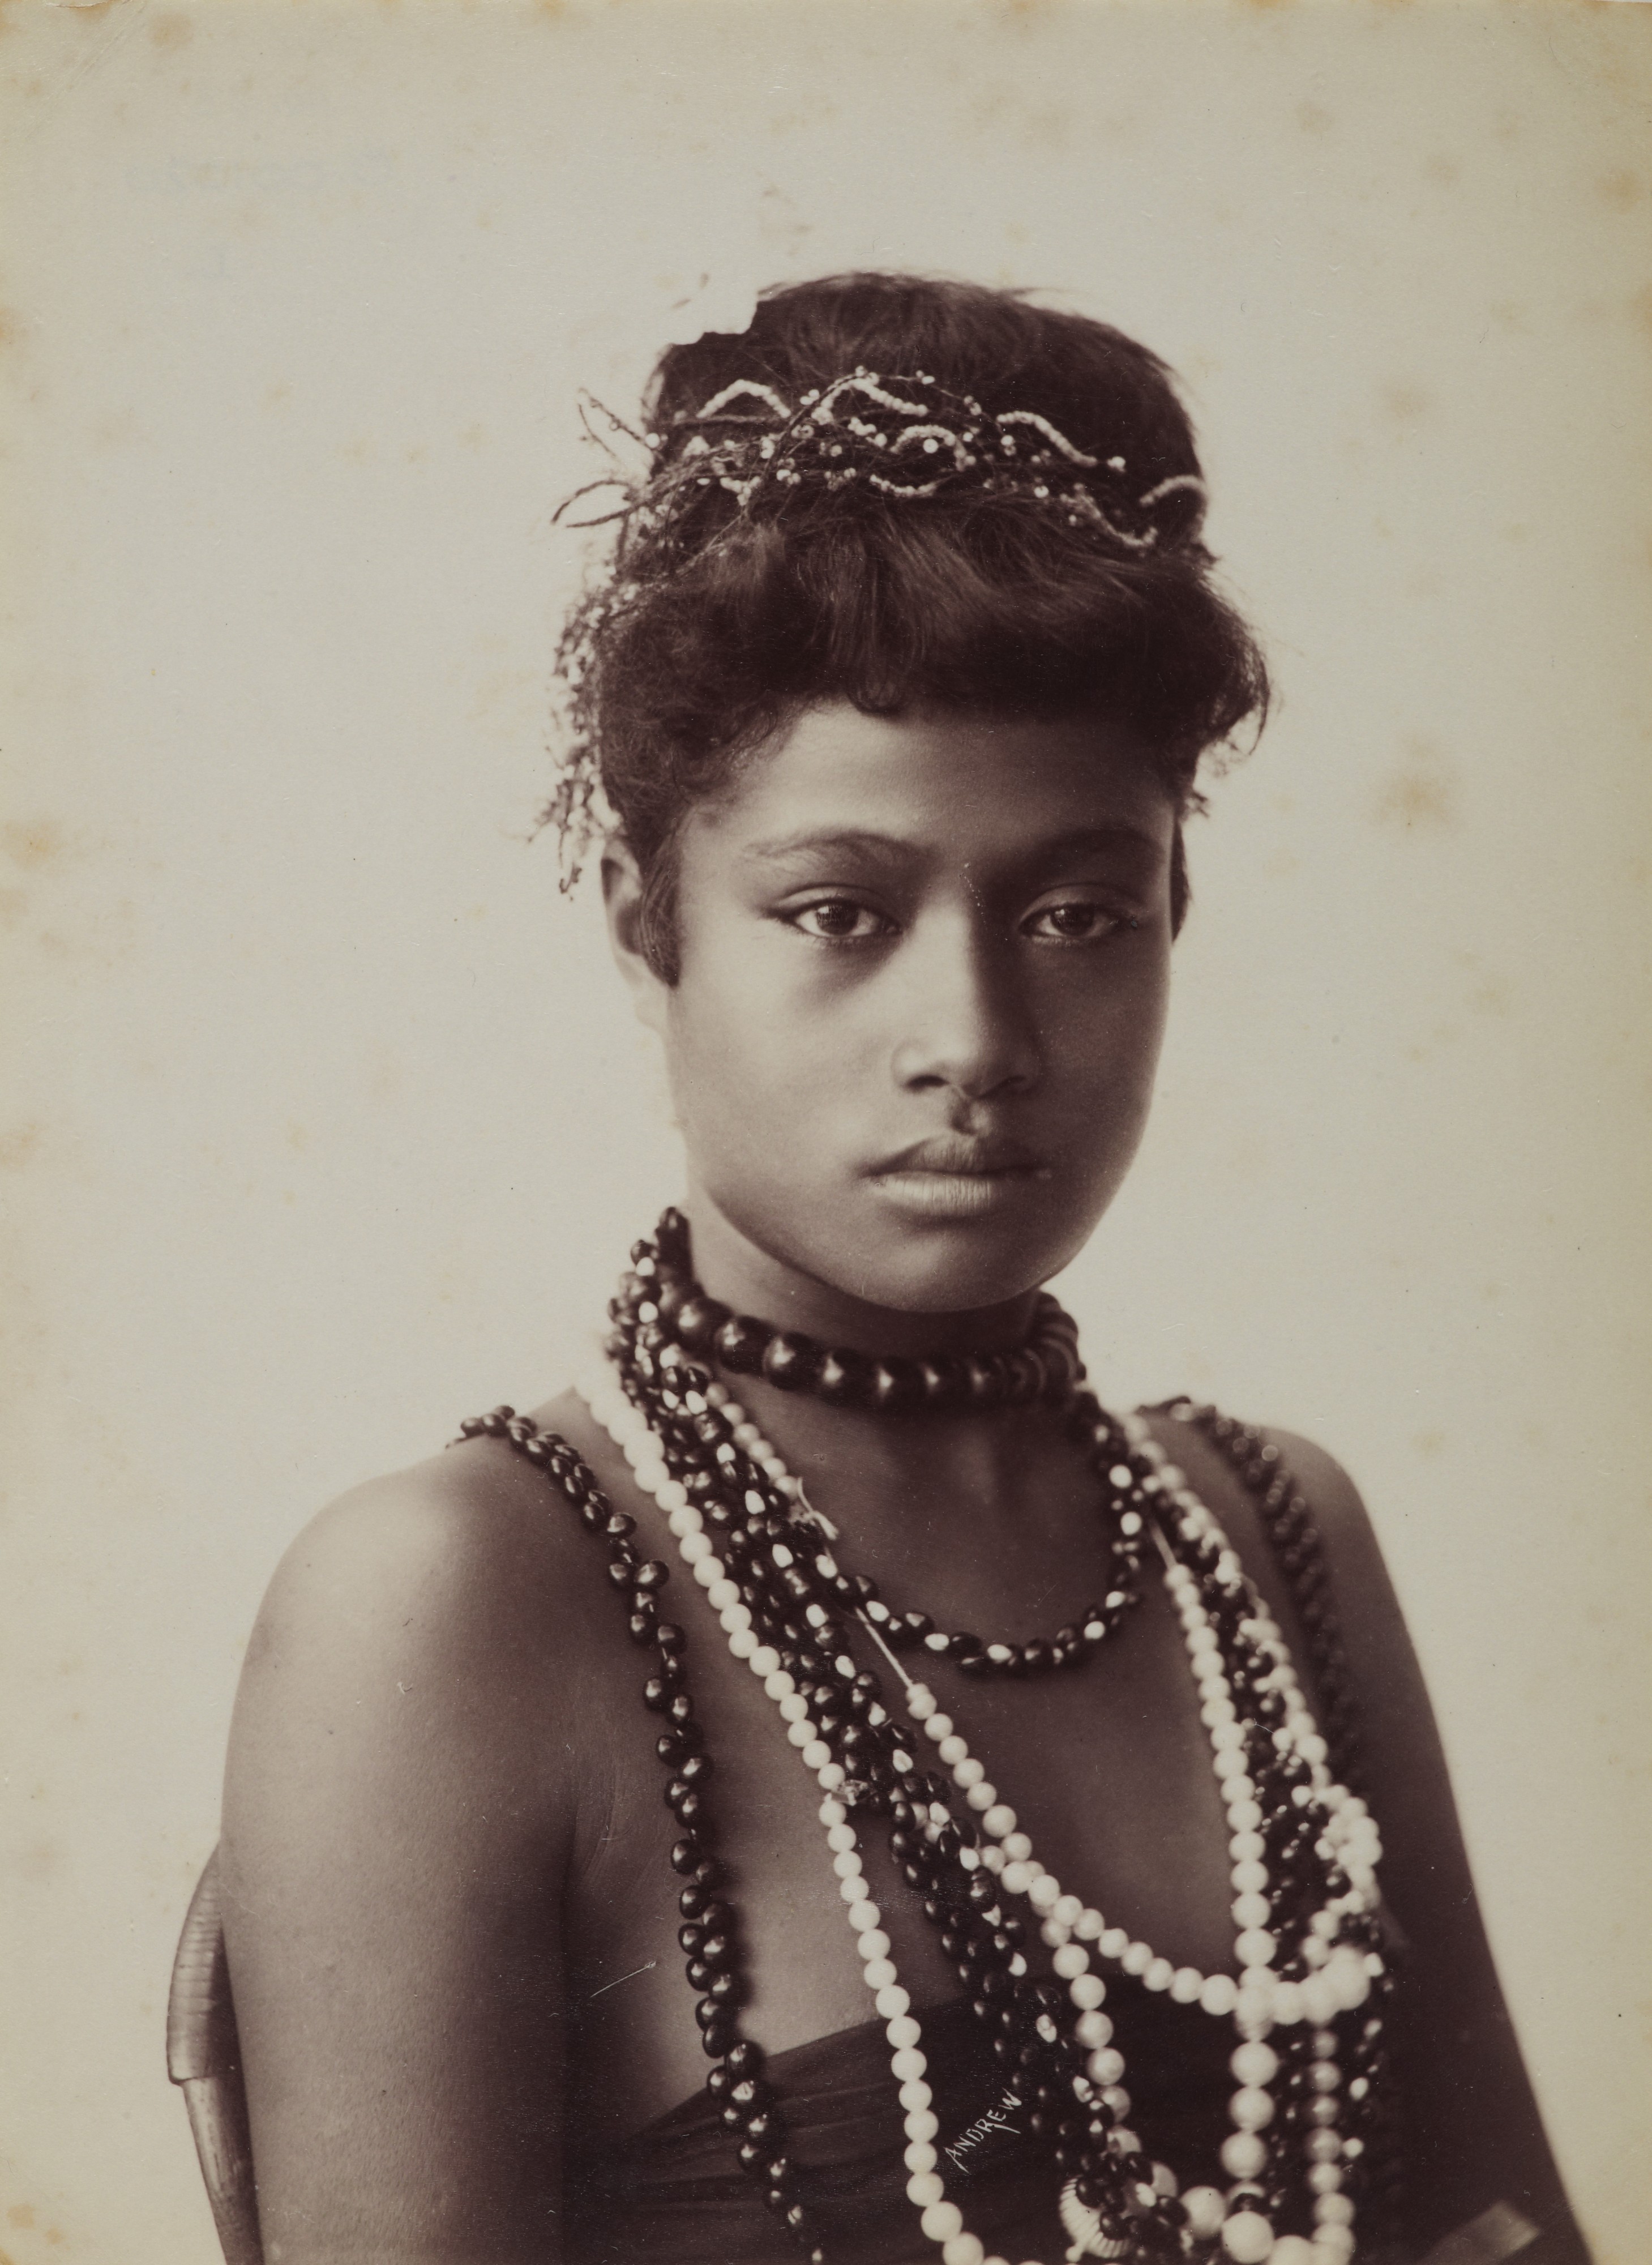 Samoan woman wearing beads, photograph by Thomas Andrew